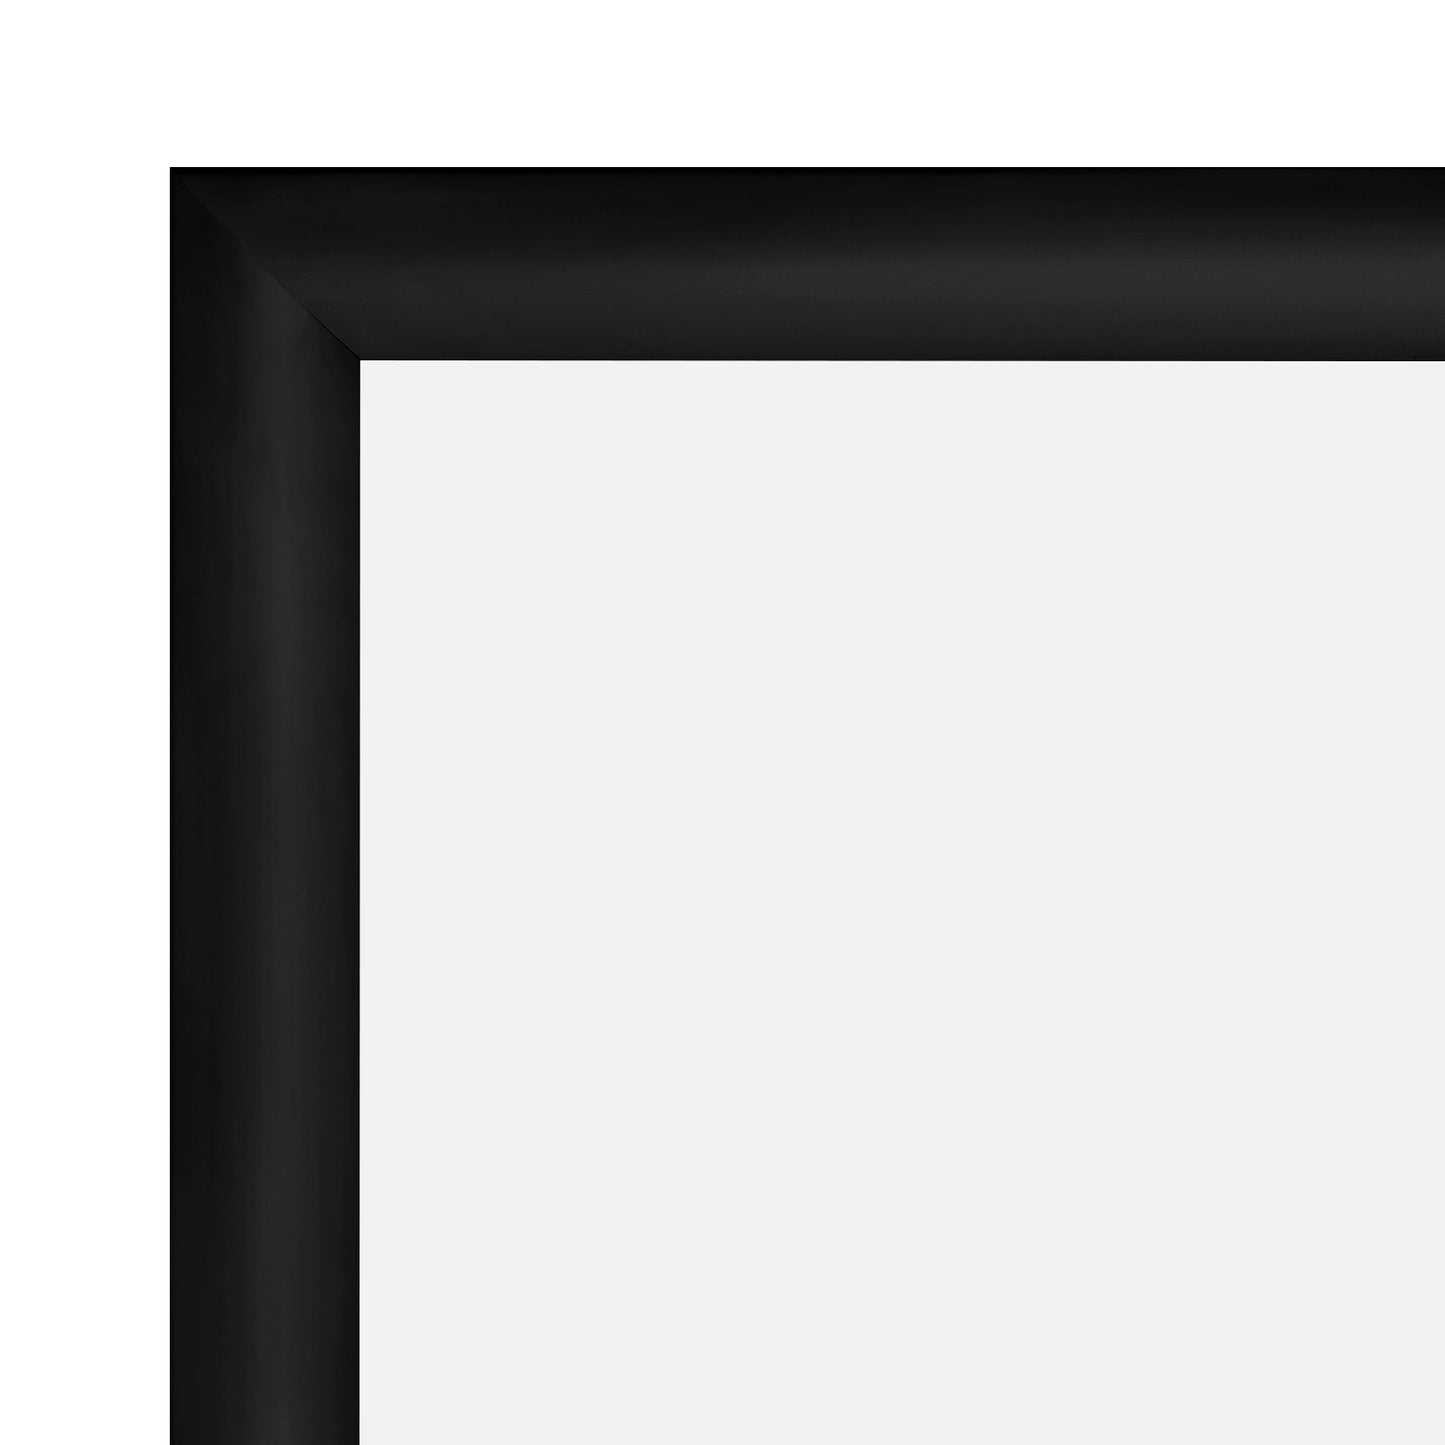 21x31 Black SnapeZo® Snap Frame - 1.2" Profile - Snap Frames Direct